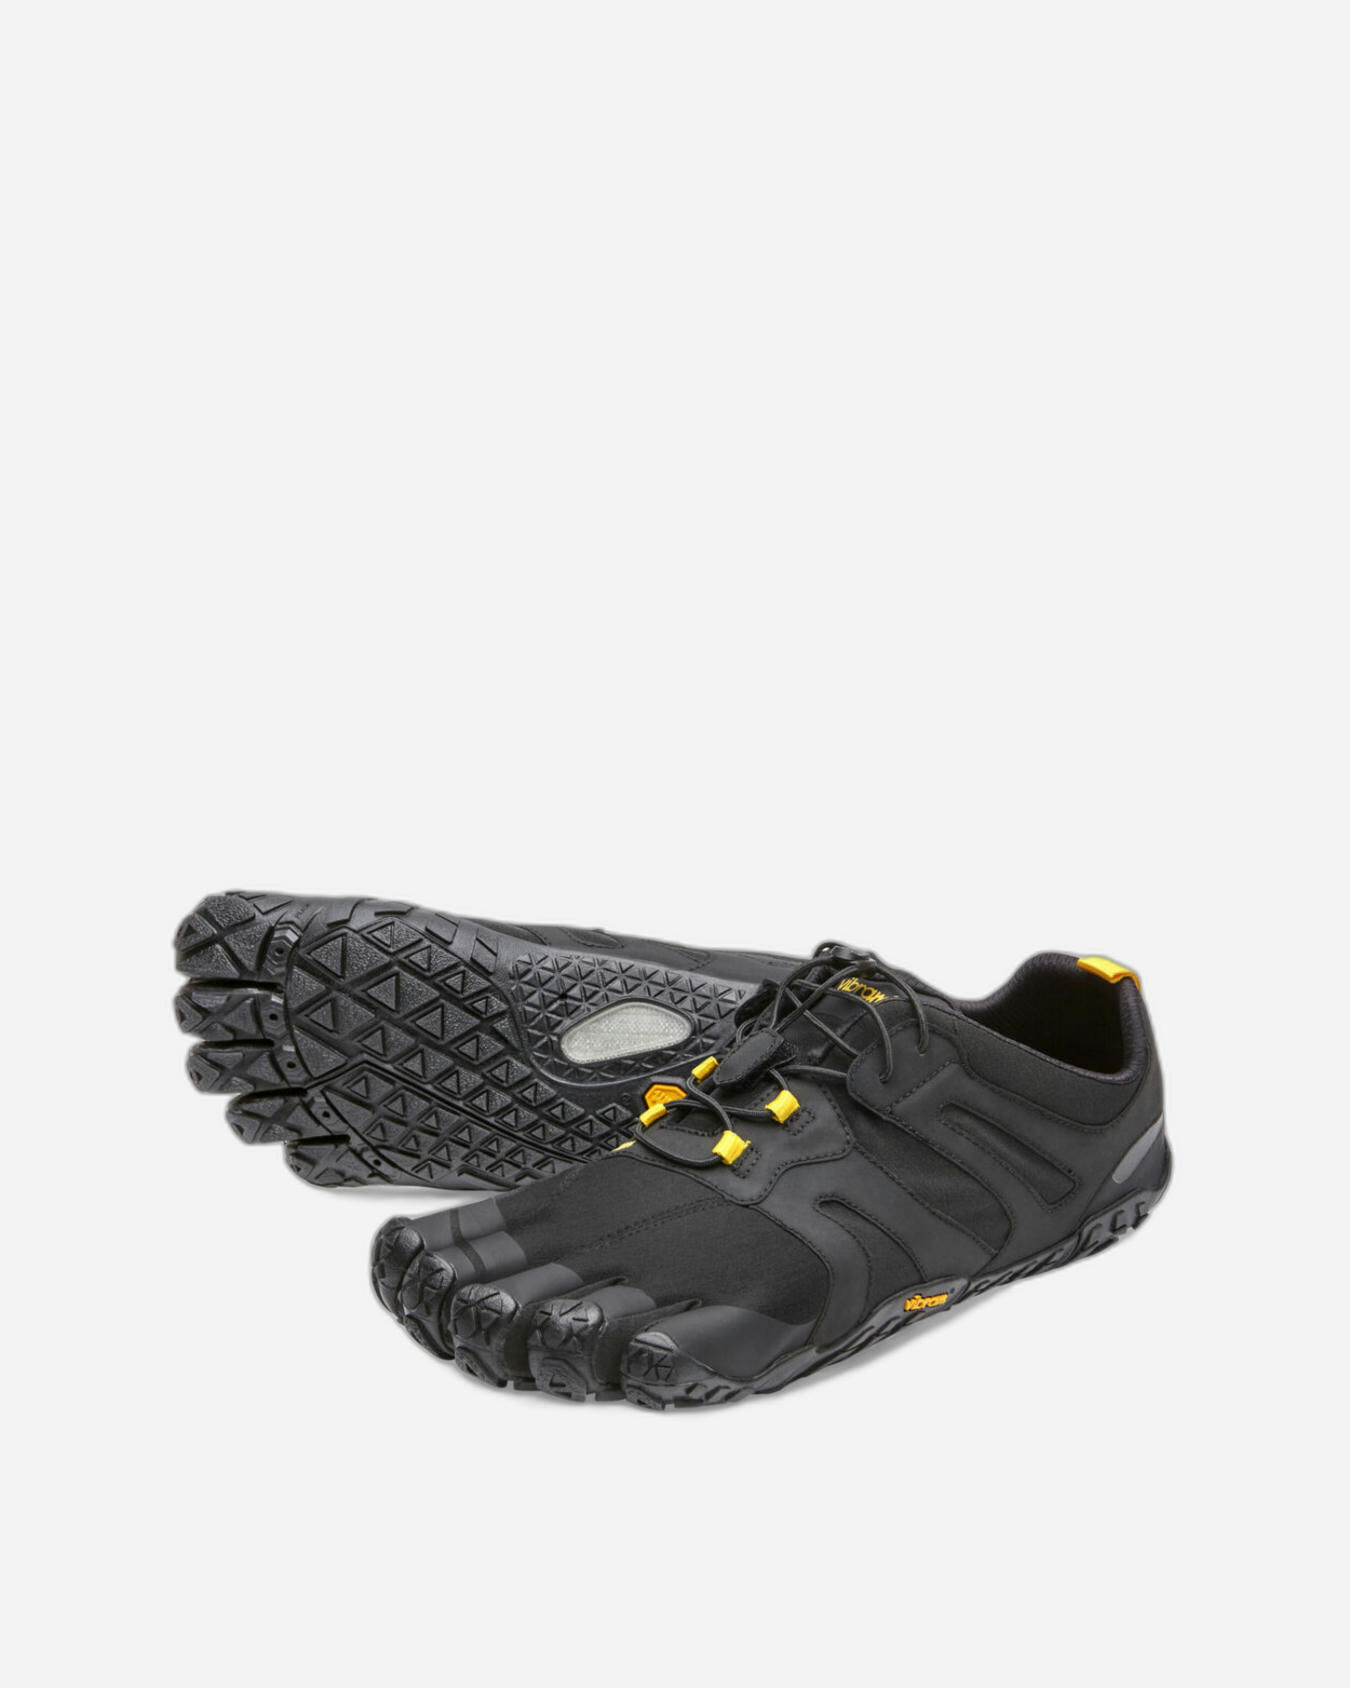 Vibram Mens FiveFingers Komodo Sport Shoes Black Sports Outdoors Running 